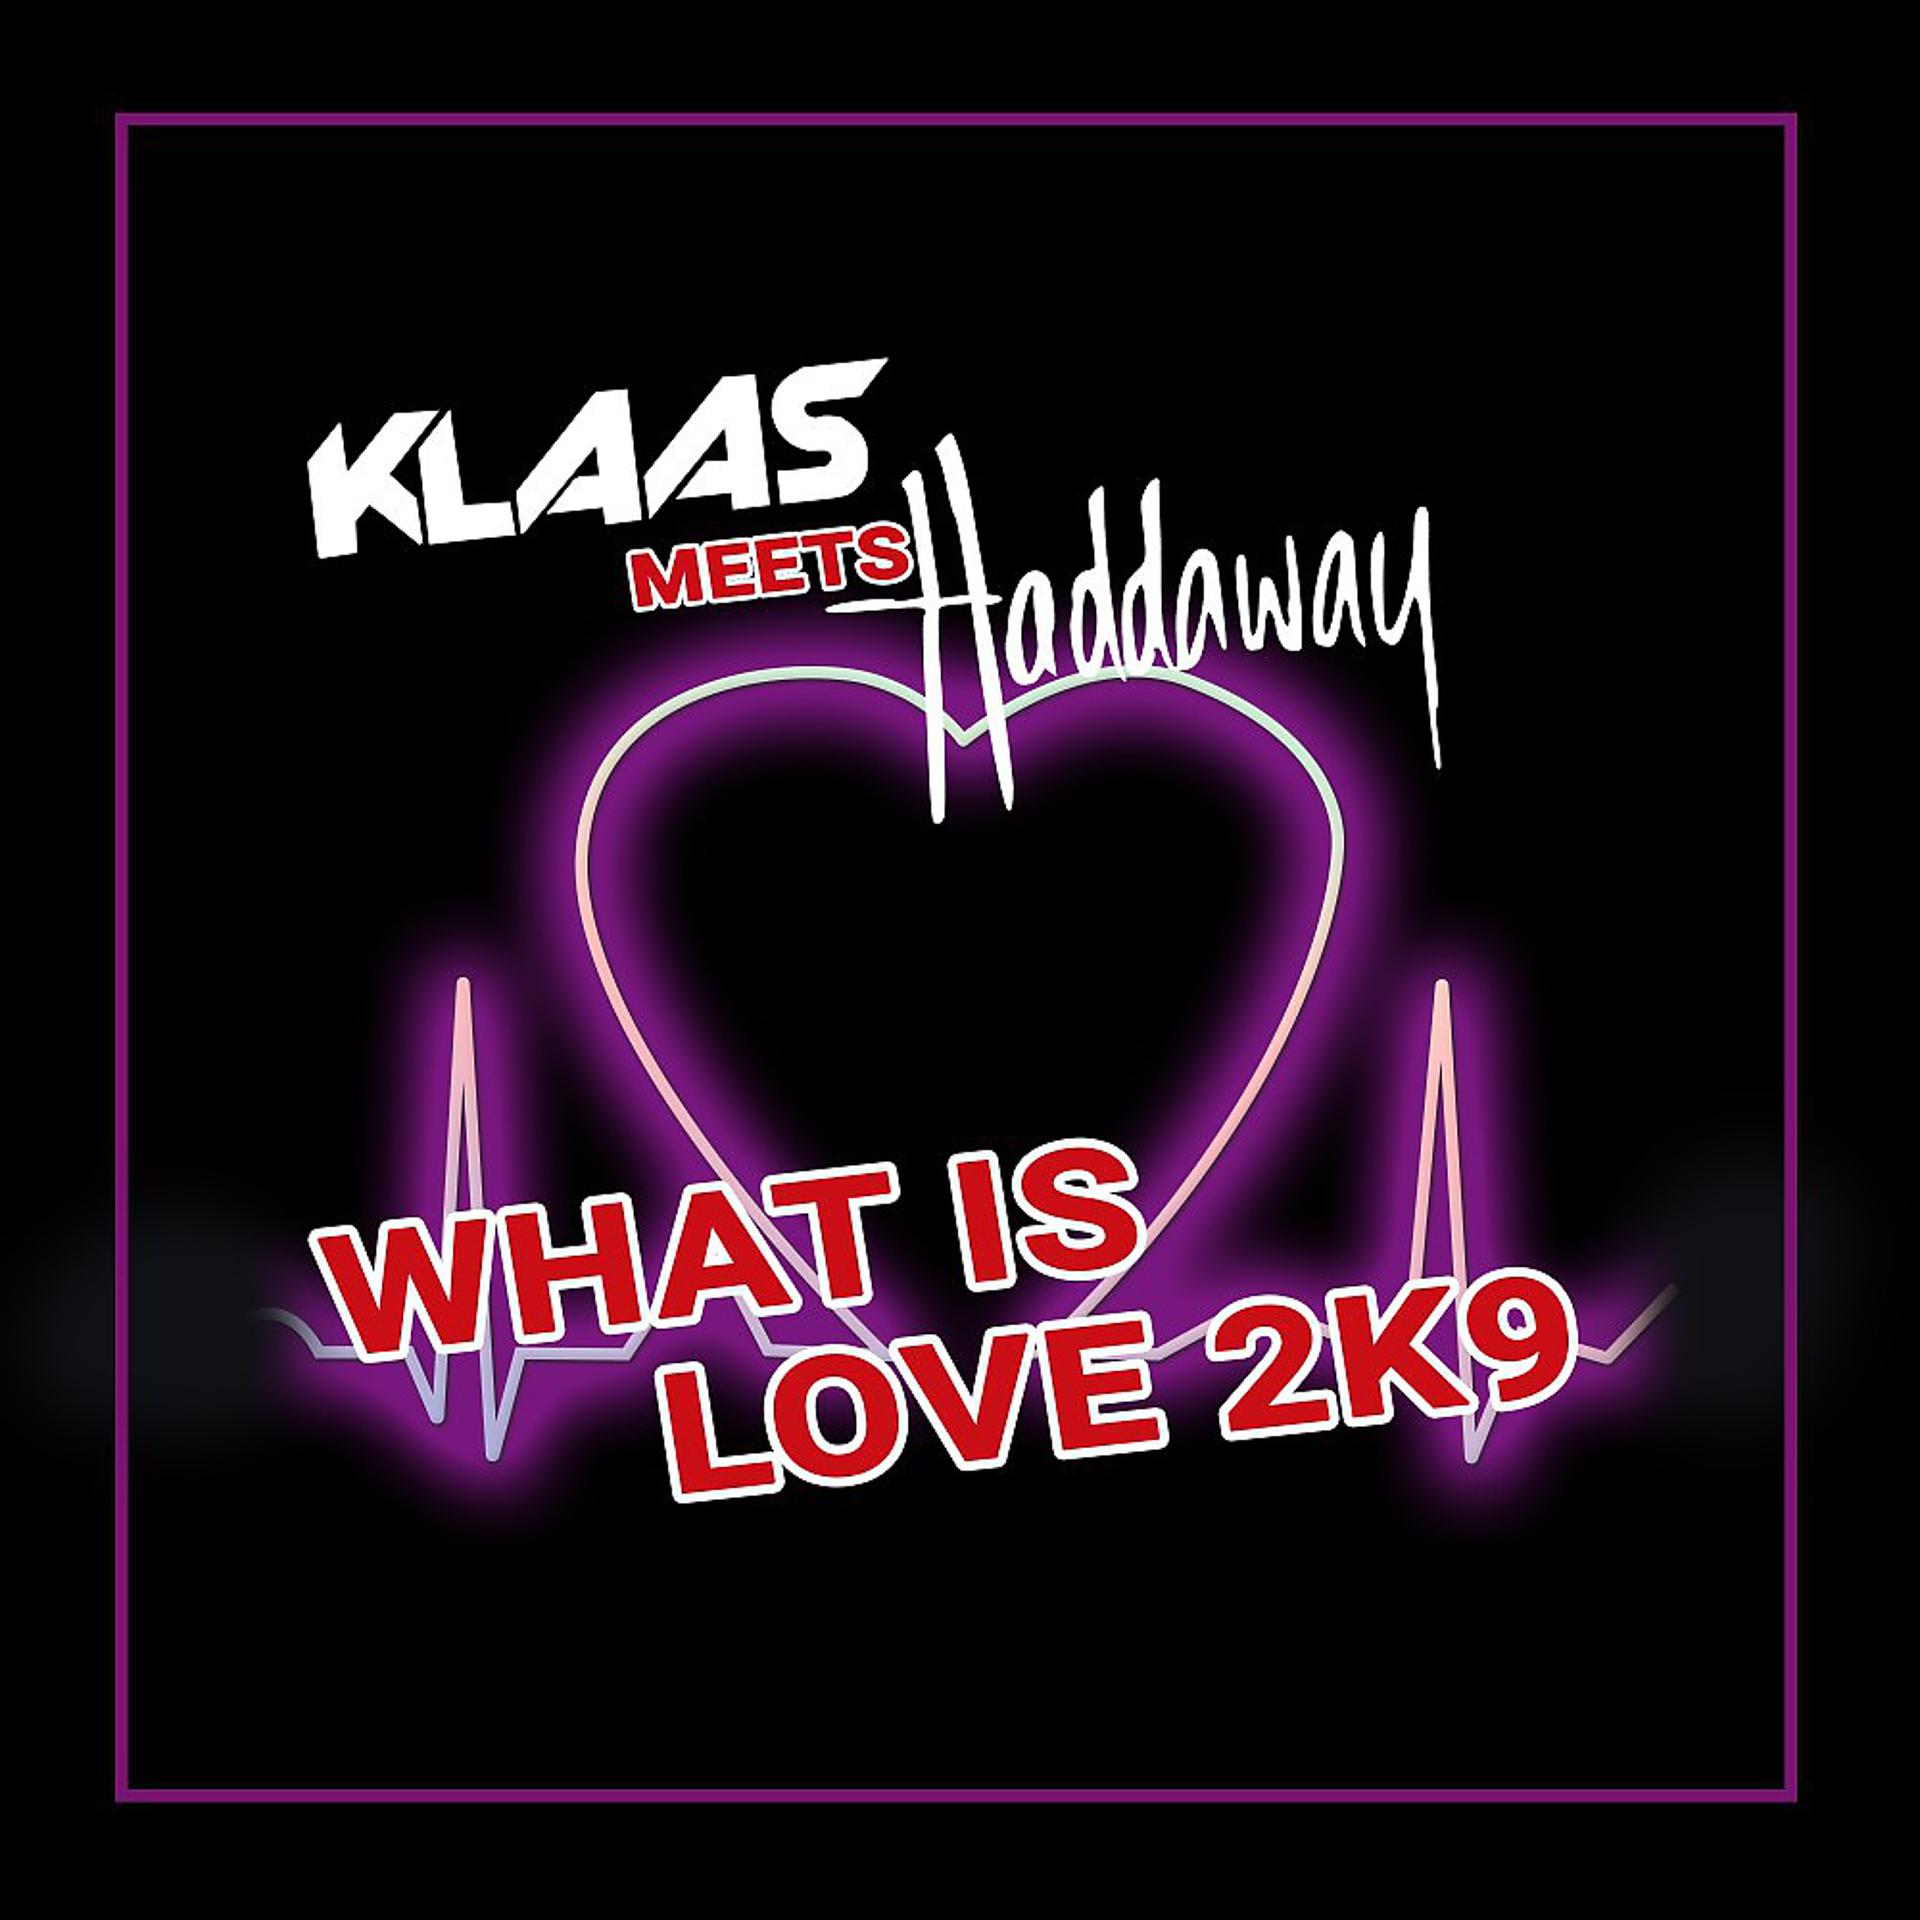 Klaas sweet. Haddaway-what-is-Love-2k9-Bodybangers-Remix.mp3. What is Love Remix. Don't leave me this way Klaas. Klaas the way.